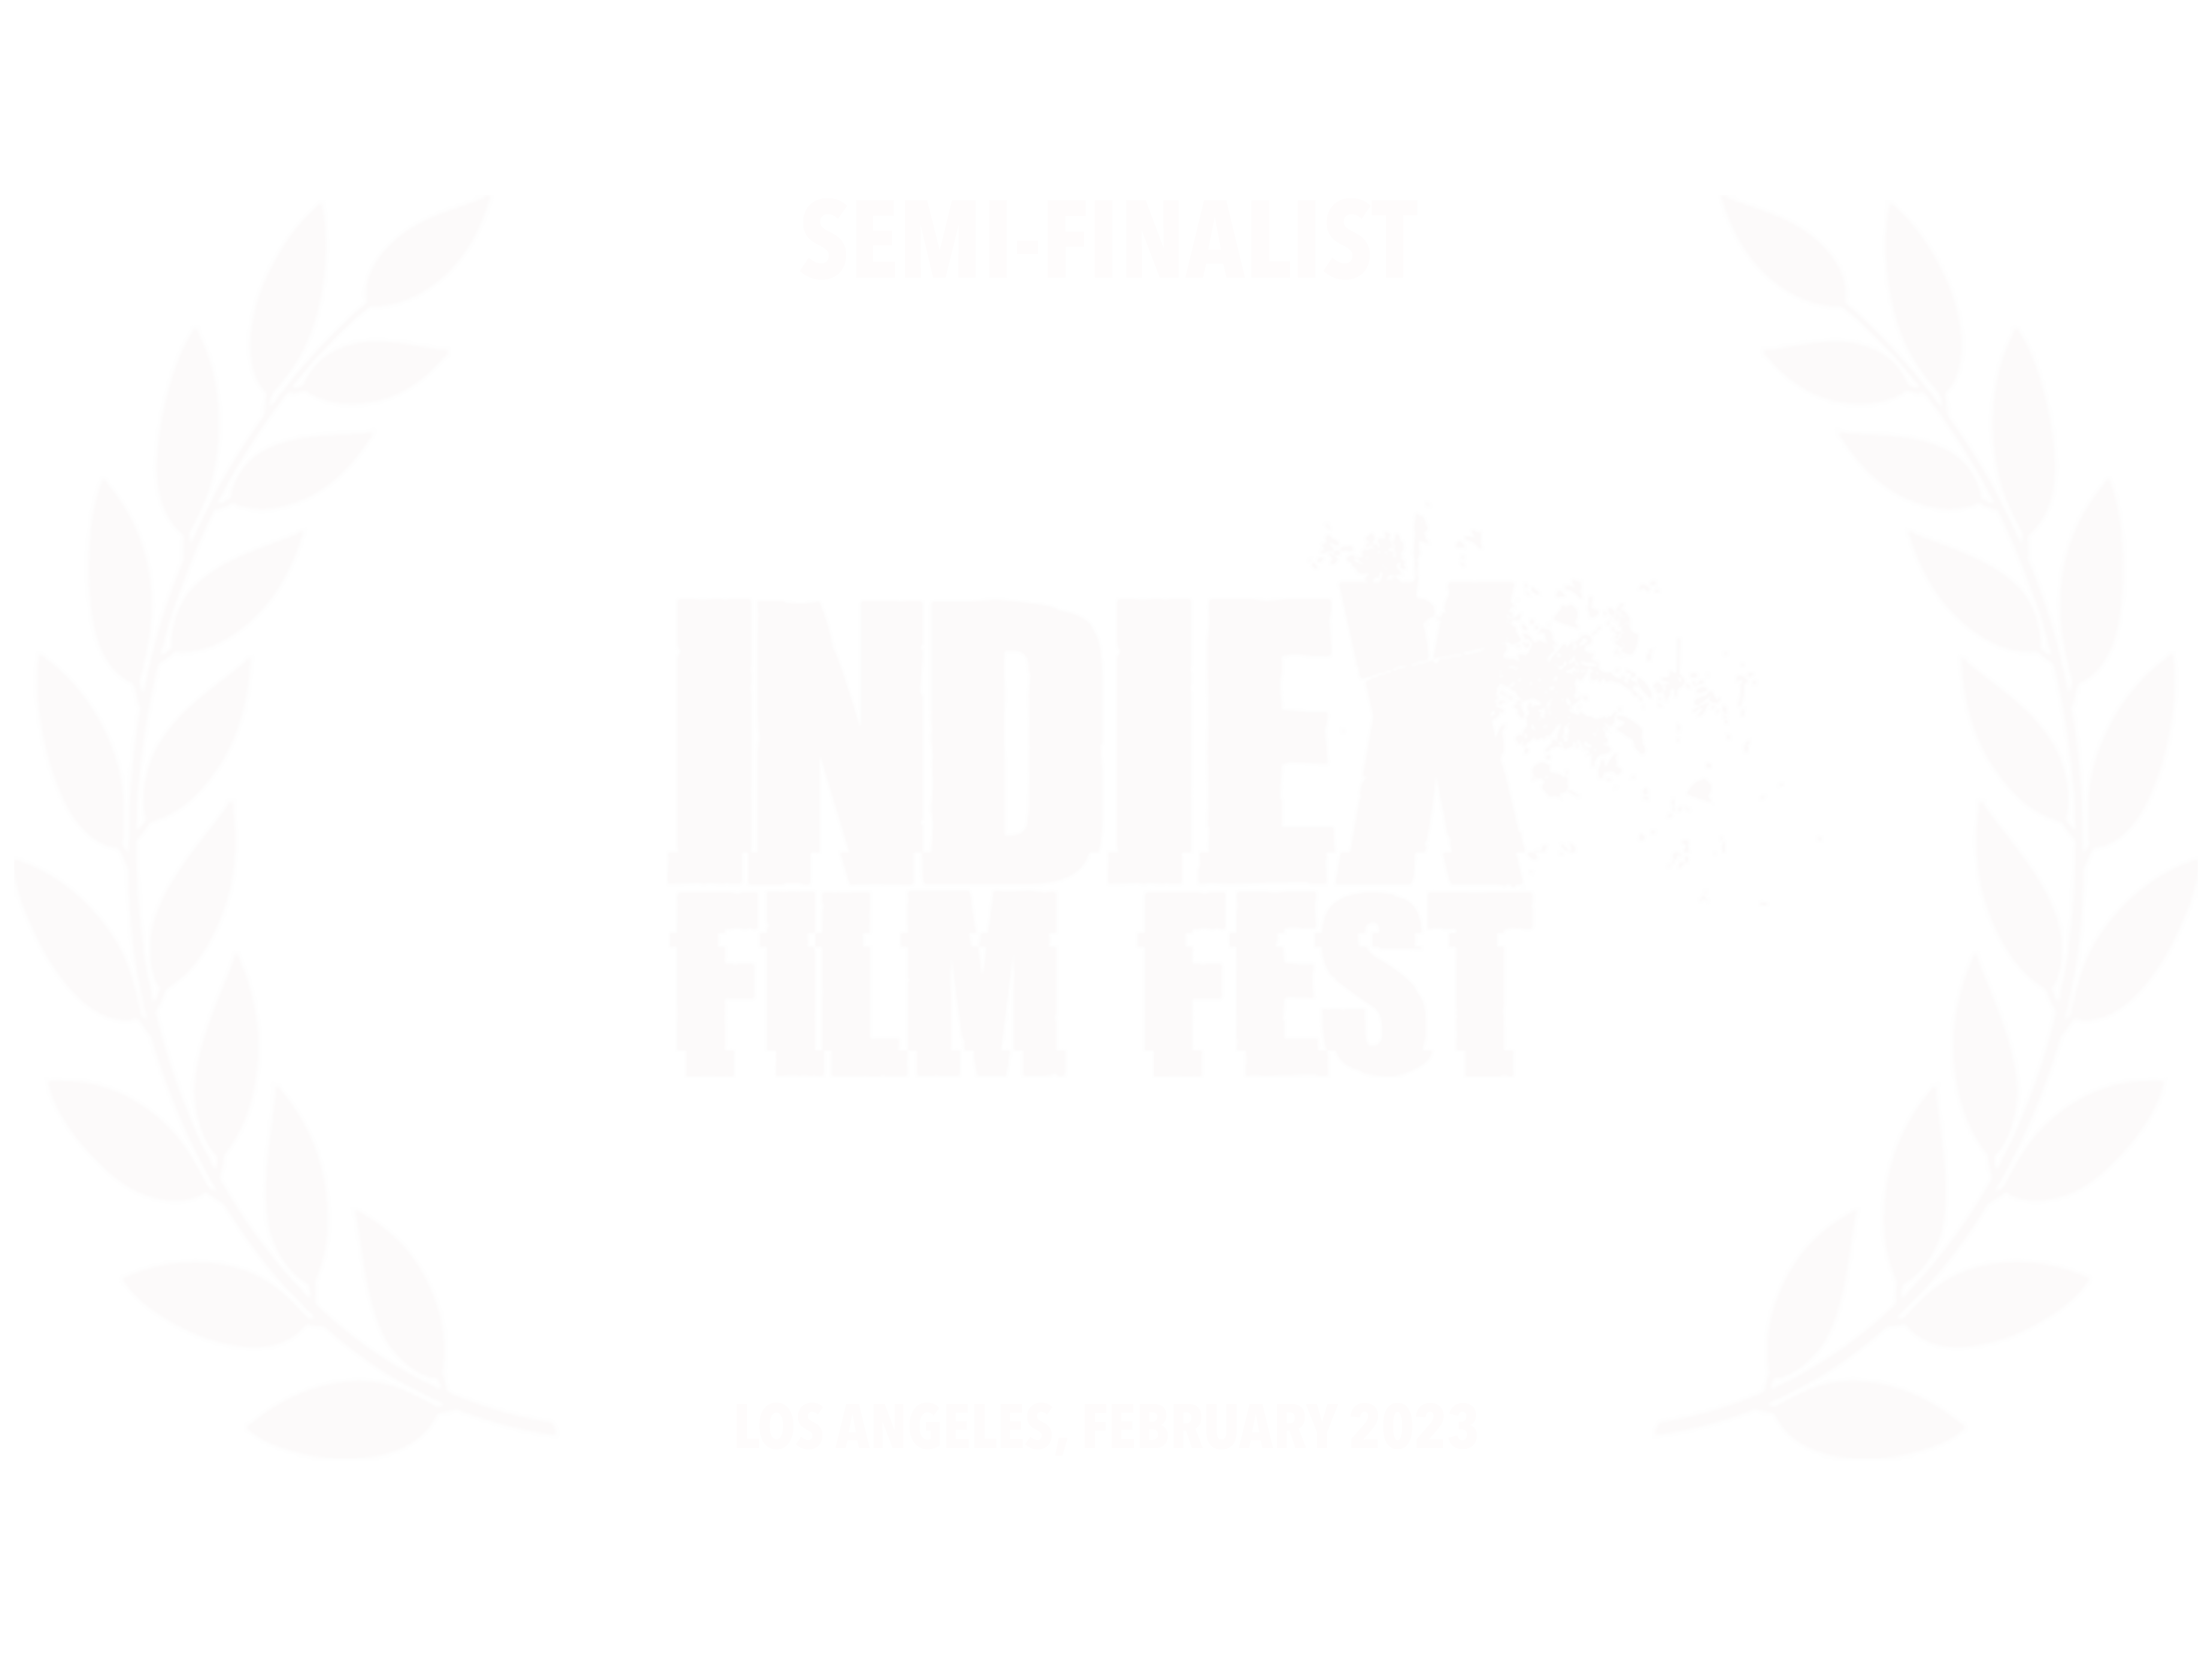 IndieX Film Festival Semi Finalist LOVED